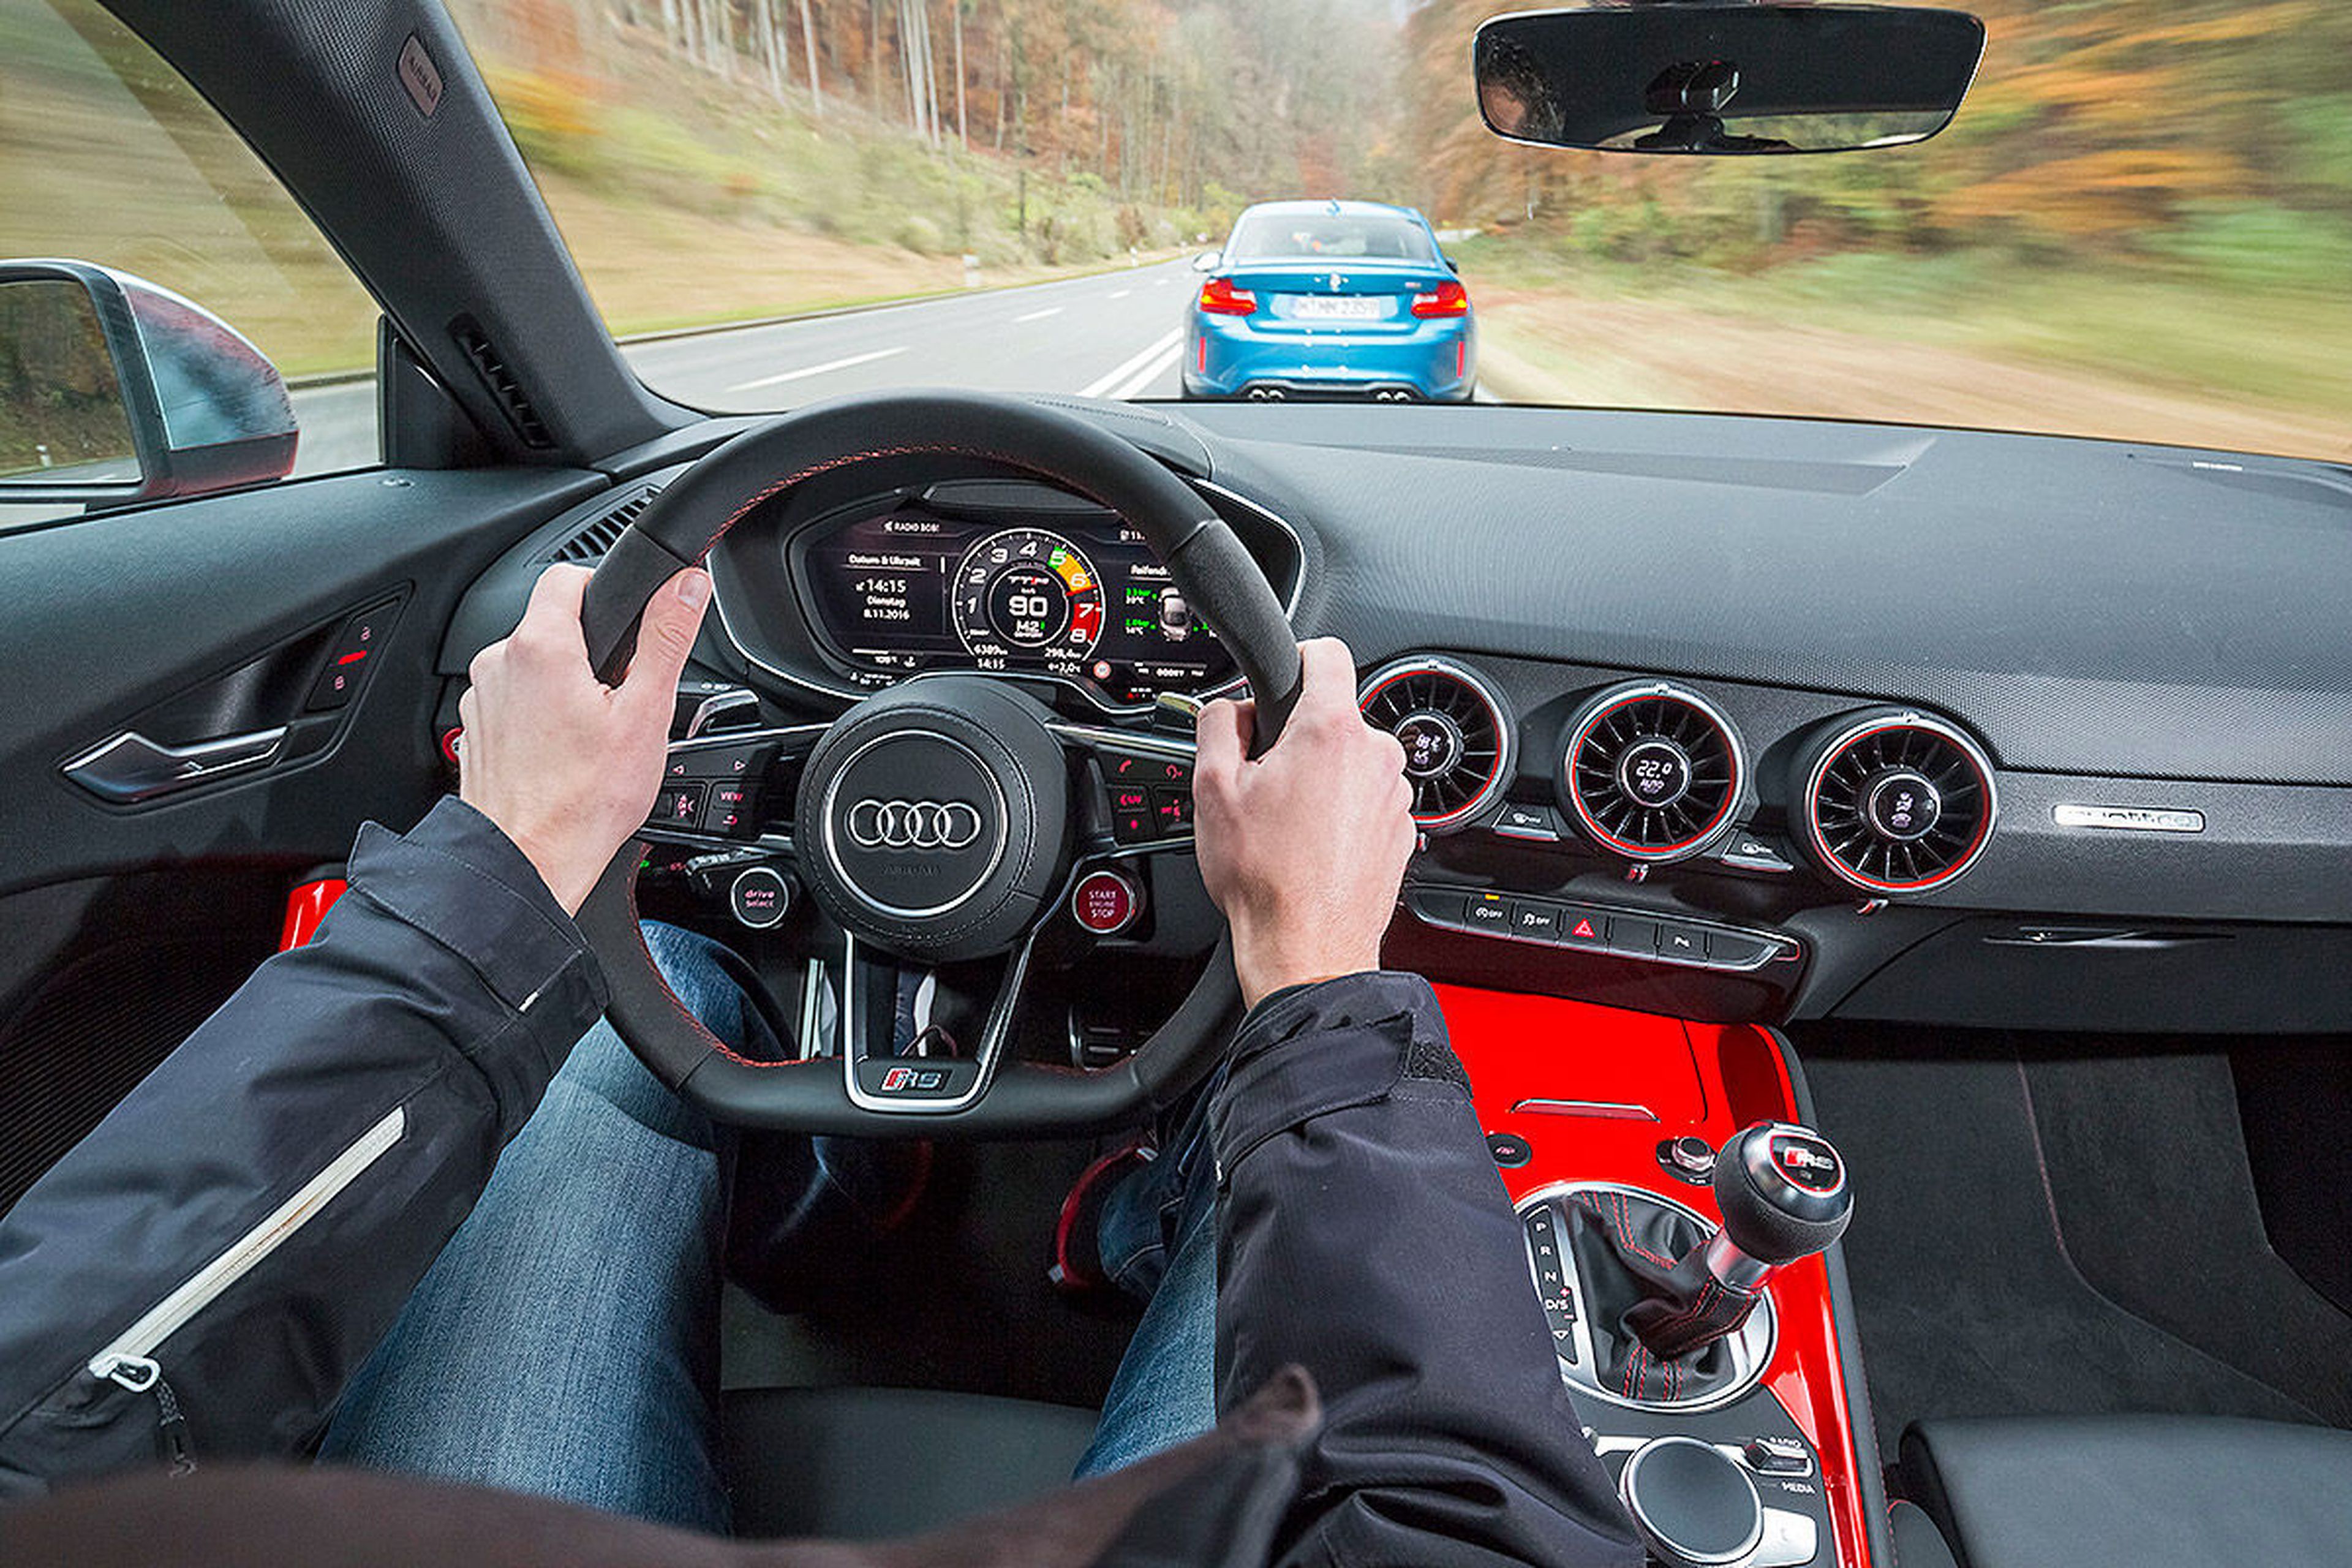 Cara a cara: Audi TT RS vs BMW M2